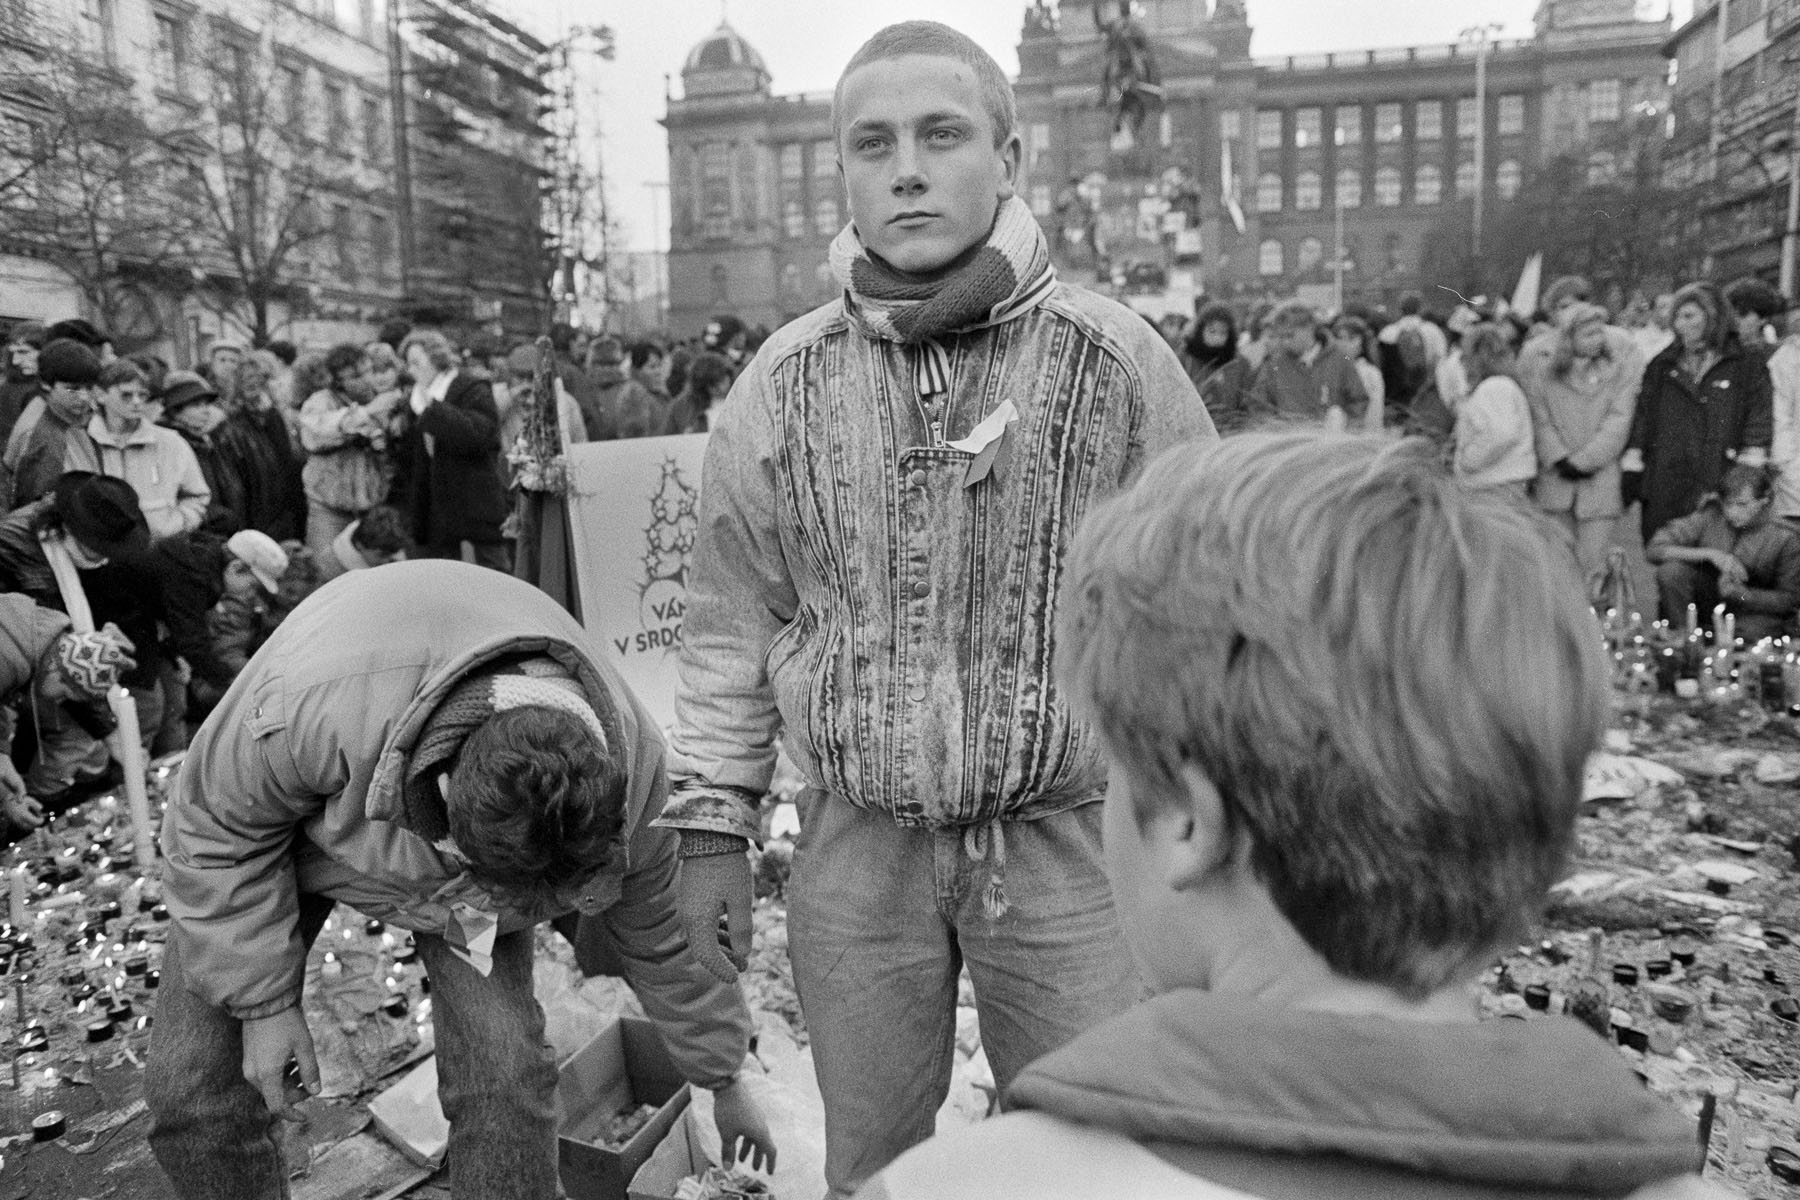 Prague inhabitants join in the daily demonstration on Venceslas Square in November 1989